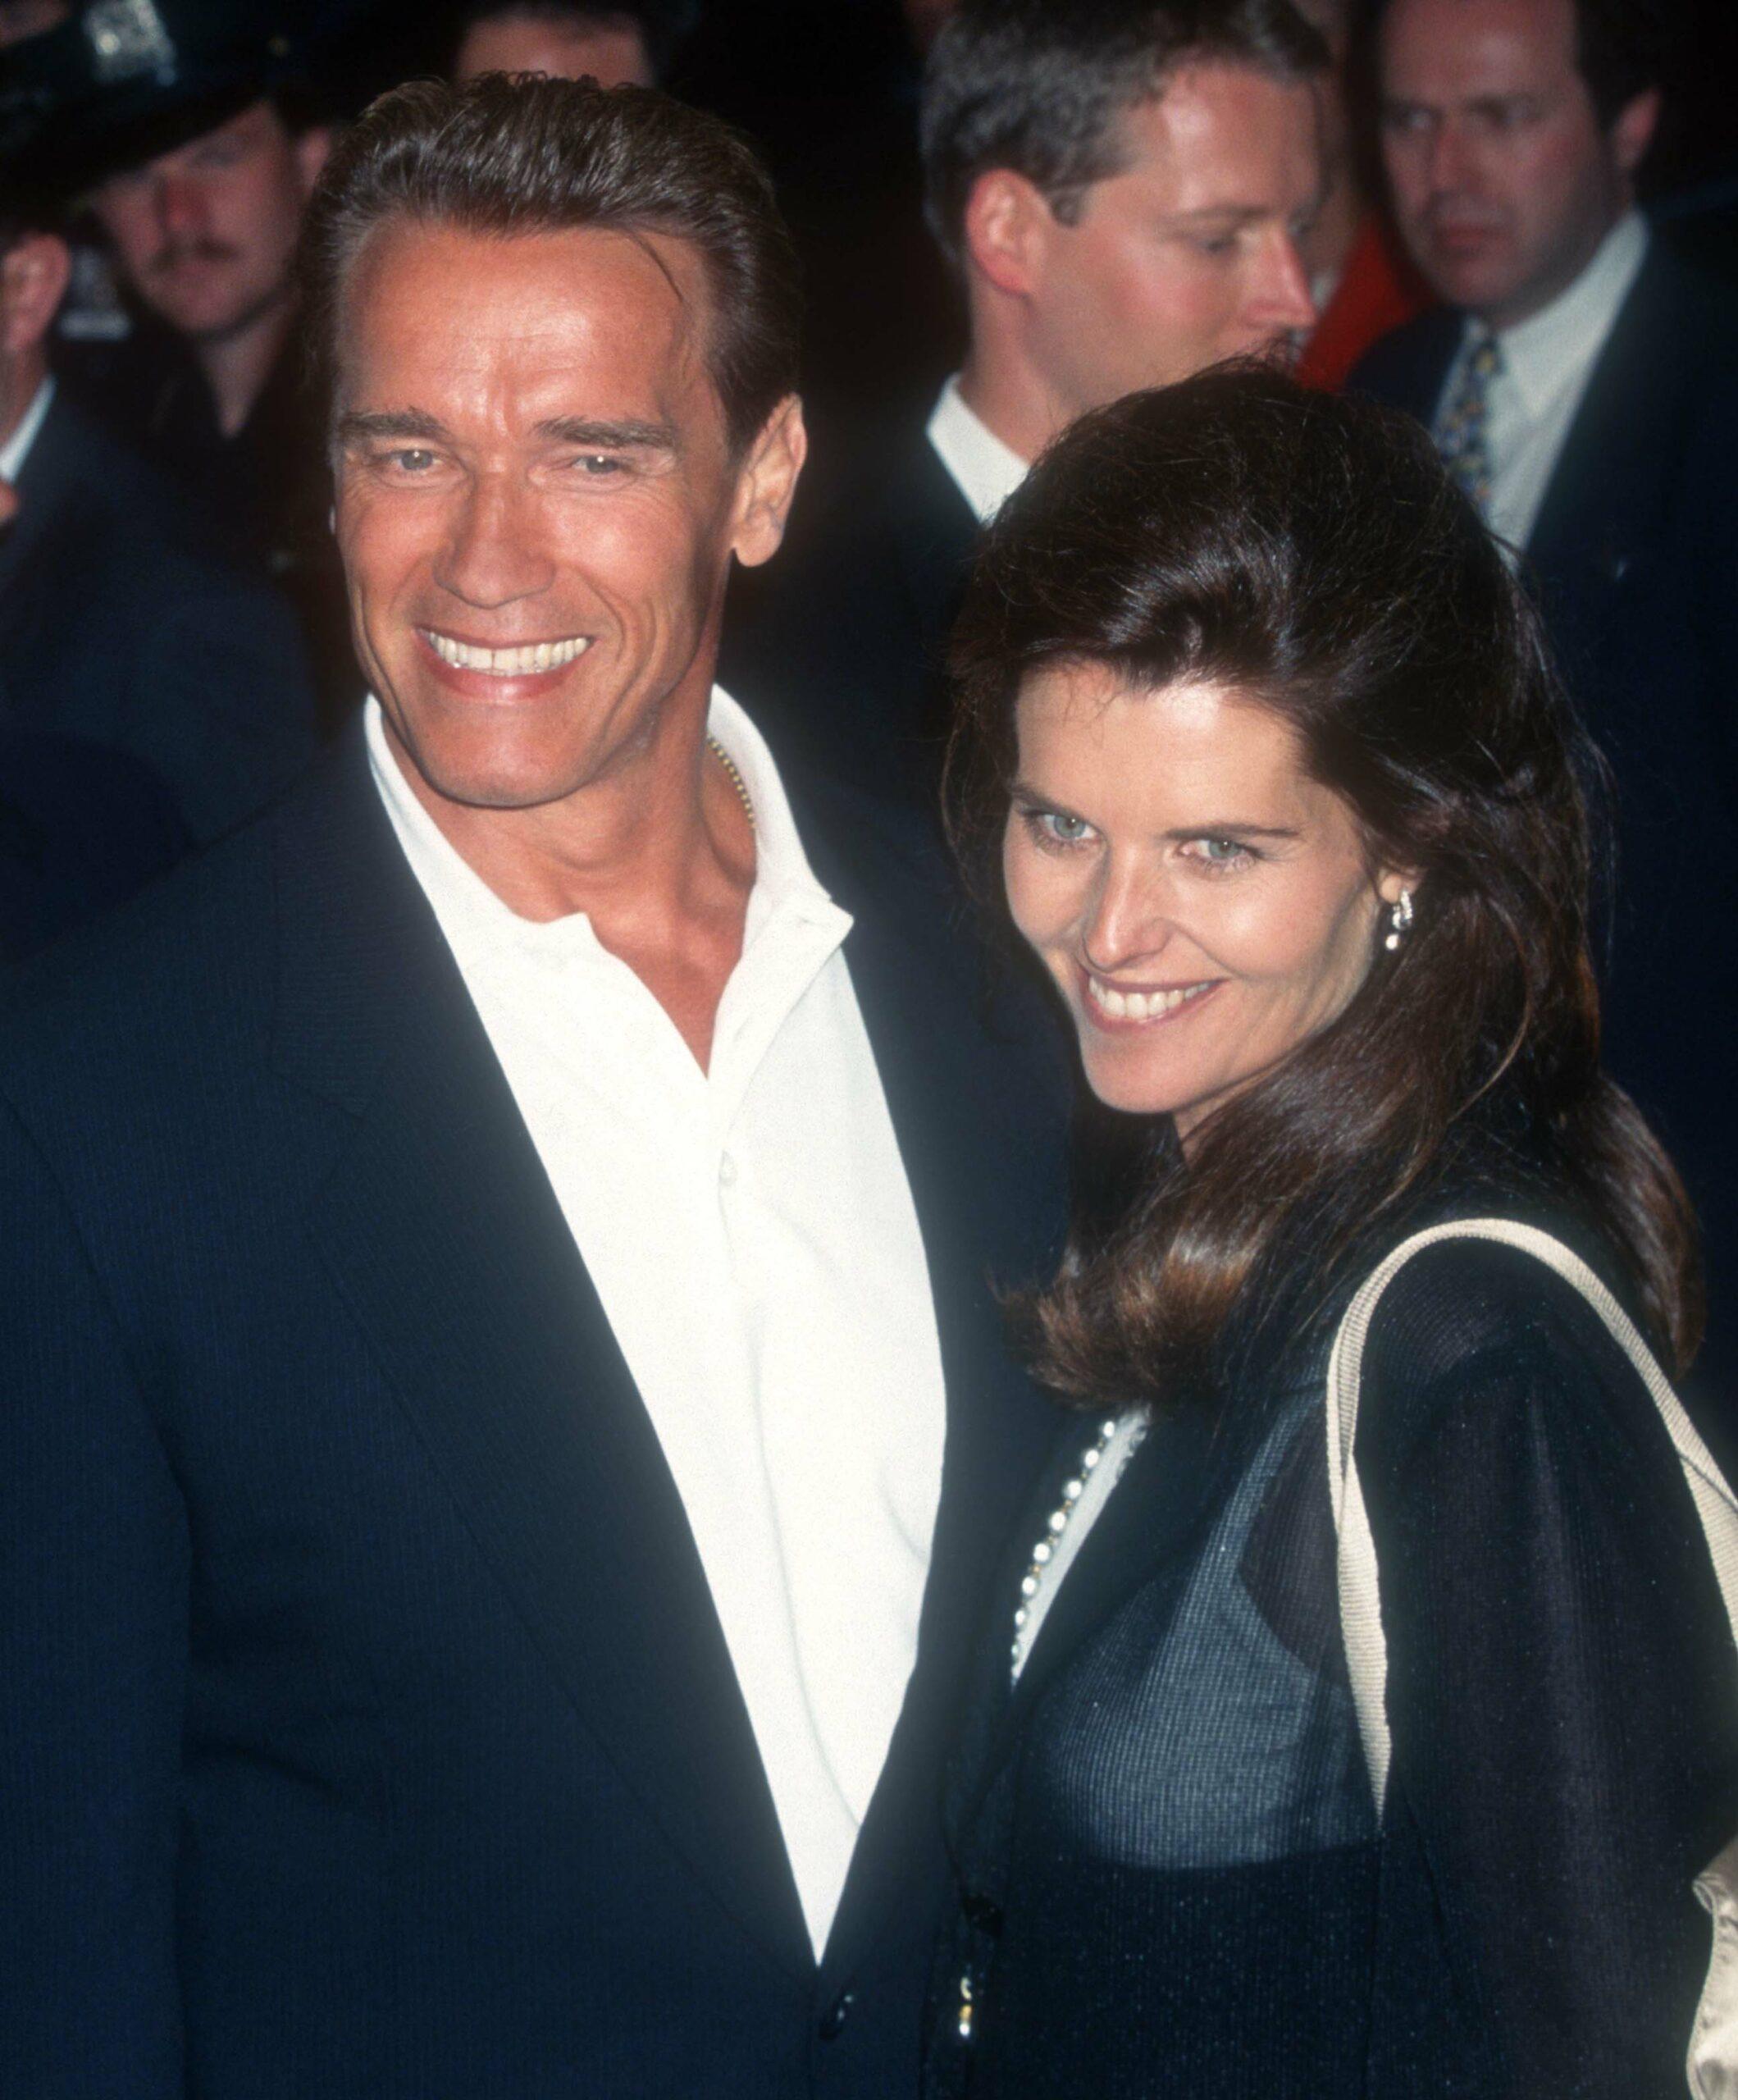 Arnold Schwarzenegger and Maria Shriver smiling